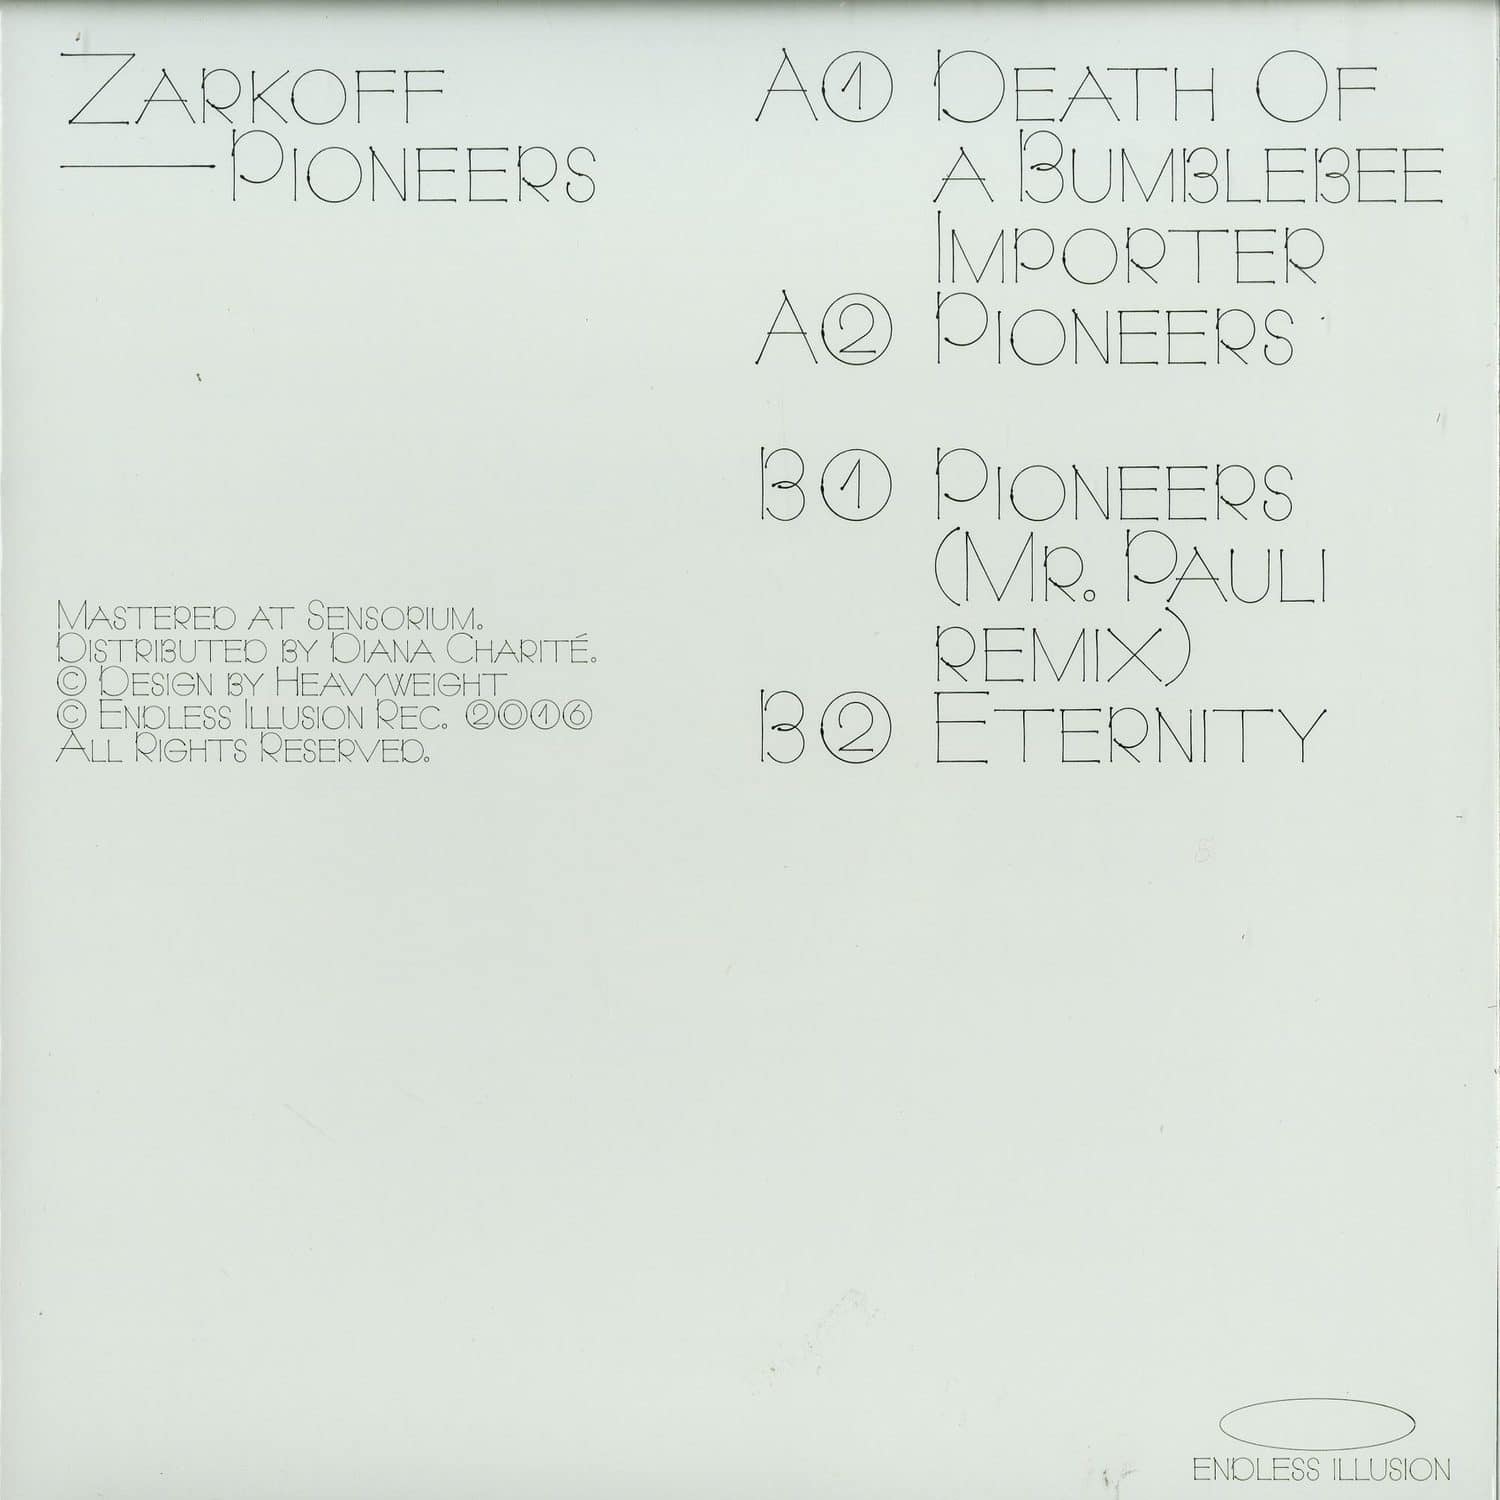 Zarkoff - PIONEERS